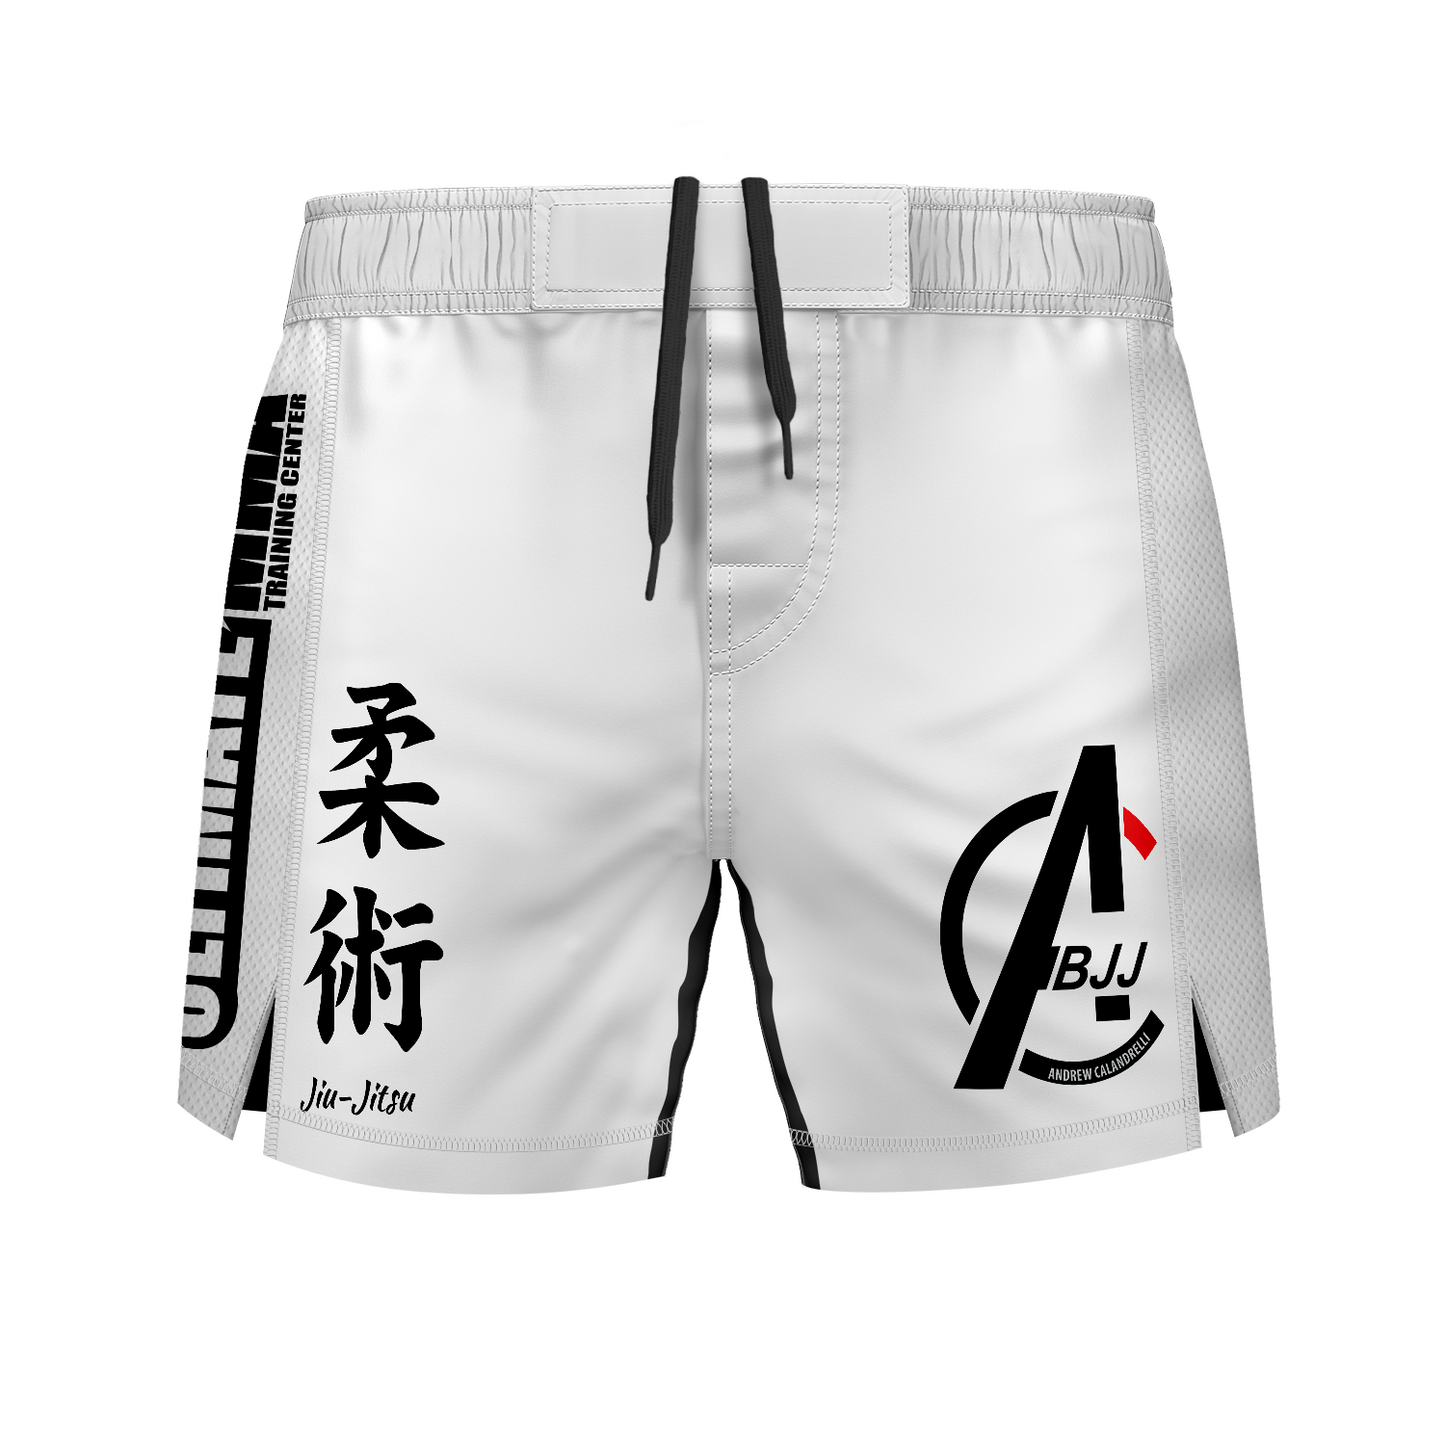 Ultimate MMA men's fight shorts Kanji, white